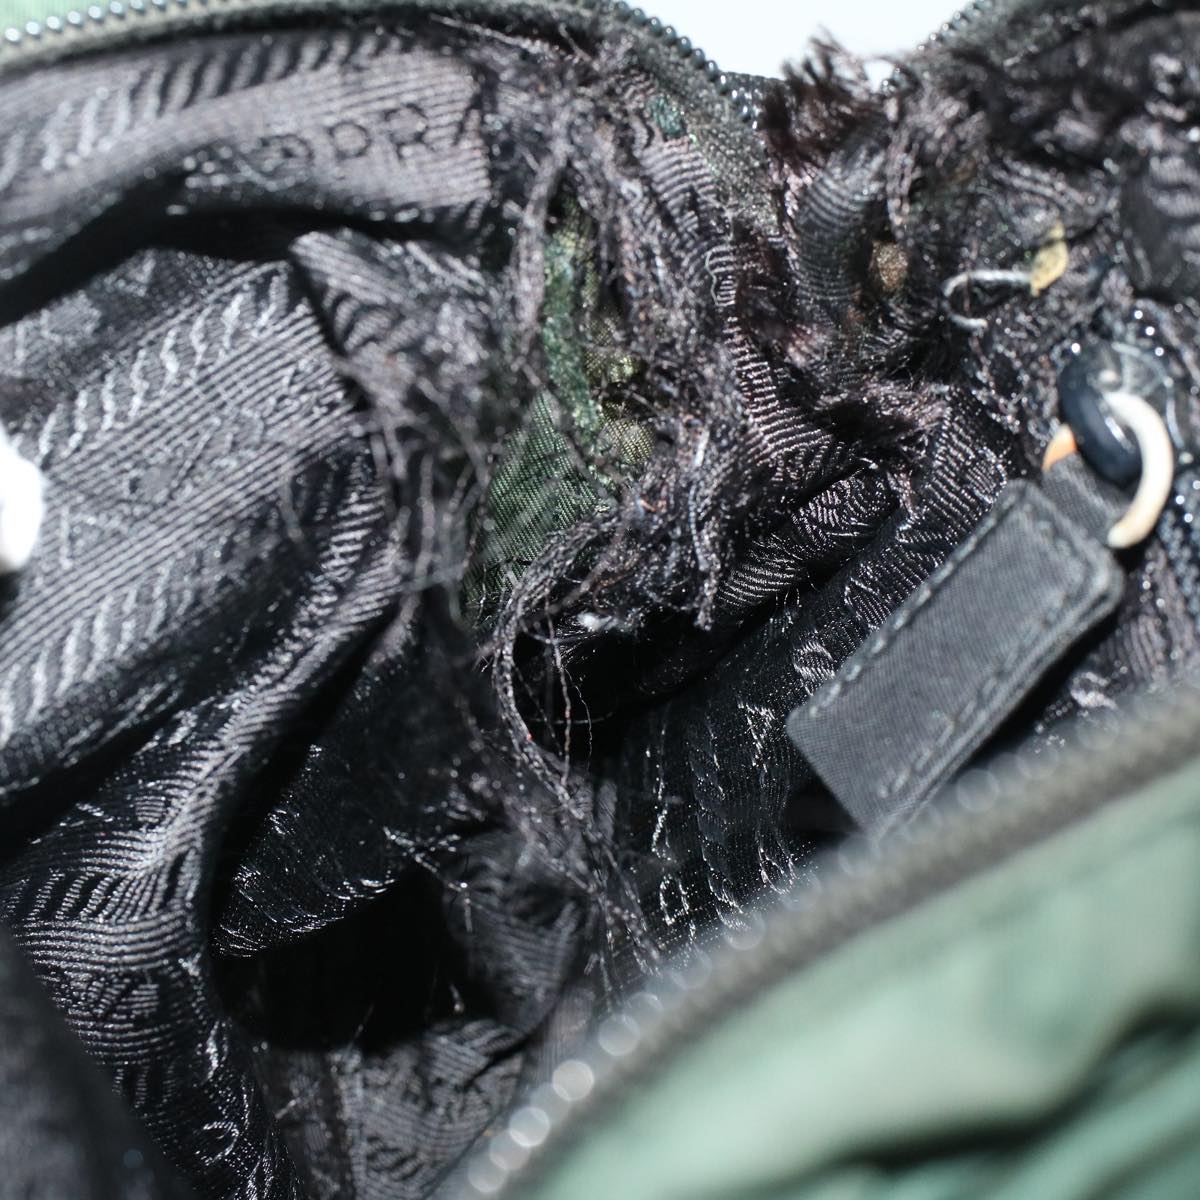 PRADA Sports Shoulder Bag Nylon Green Auth 56631